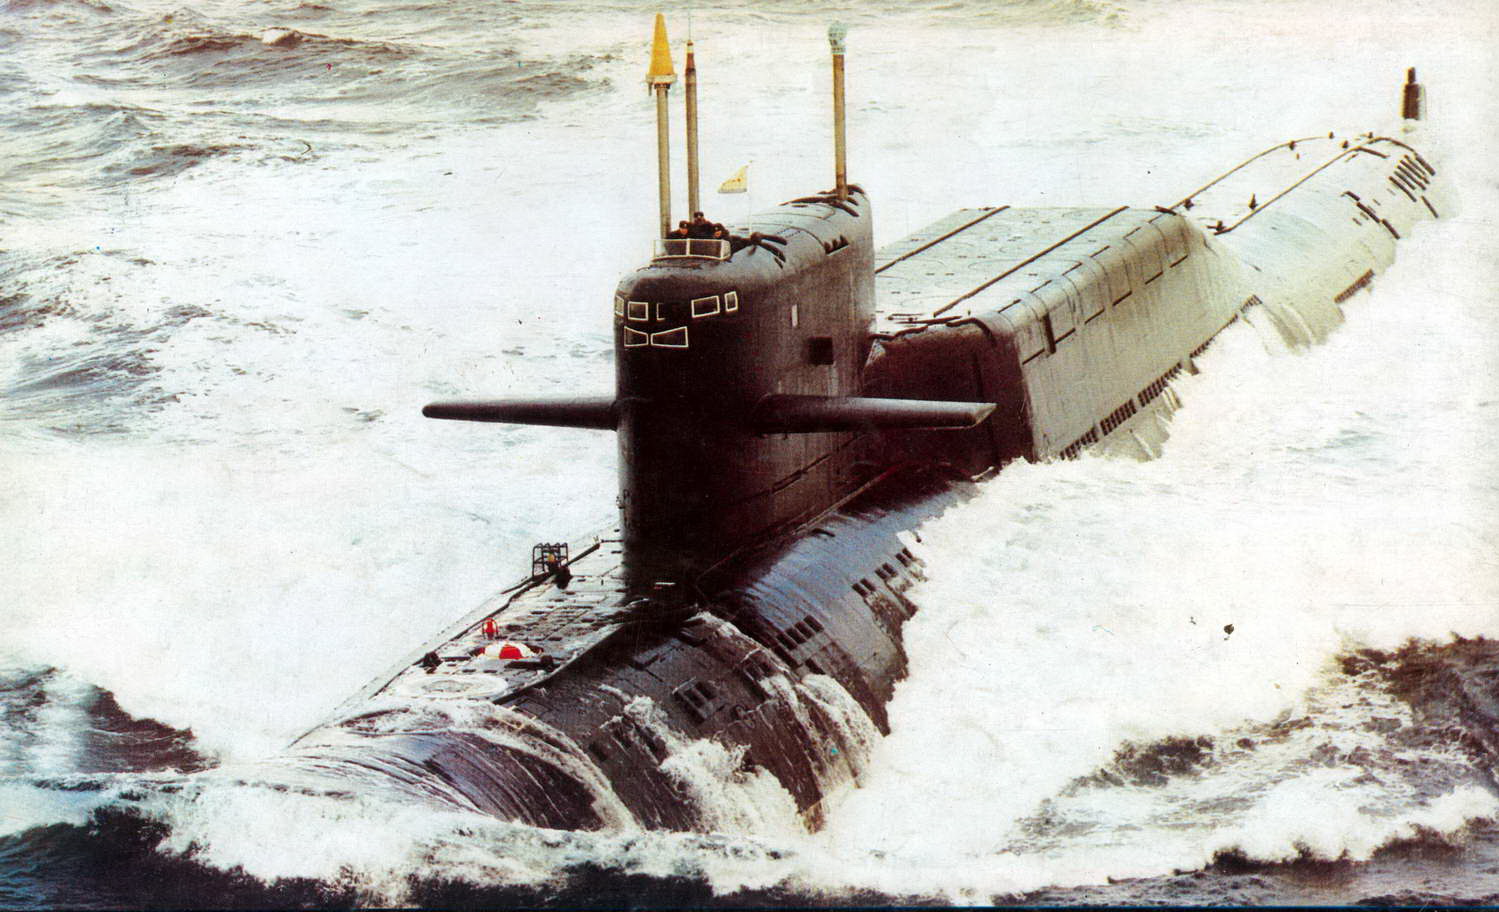 Пл ка. Подводная лодка РПКСН 667 Б. 667 БДРМ подводная лодка. Подводная лодка 667б мурена. Подводная лодка мурена проект 667б.